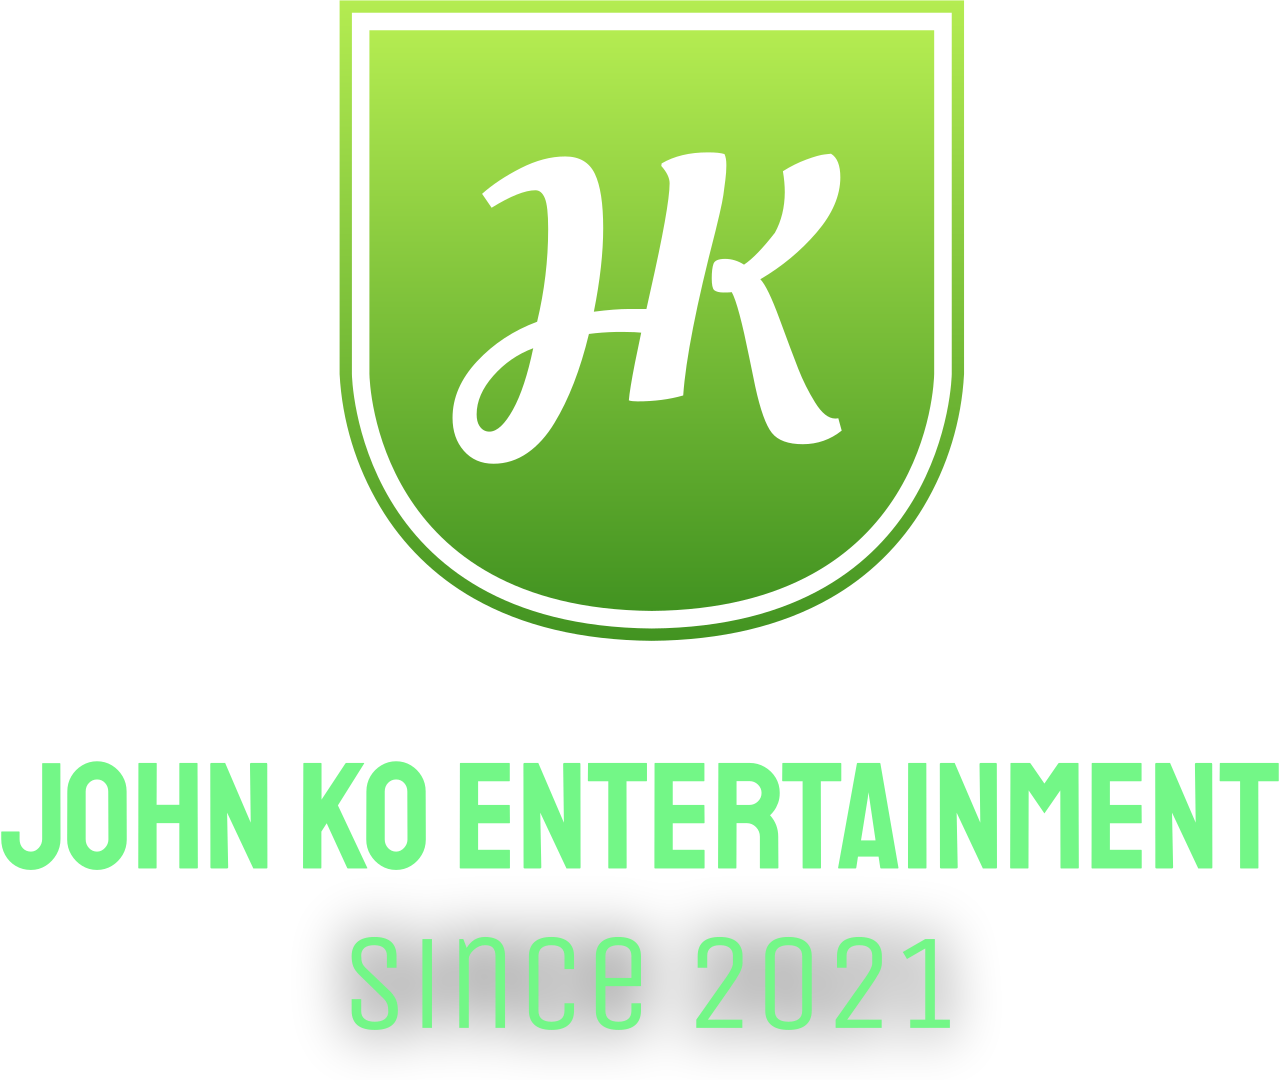 John Ko Entertainment 's logo